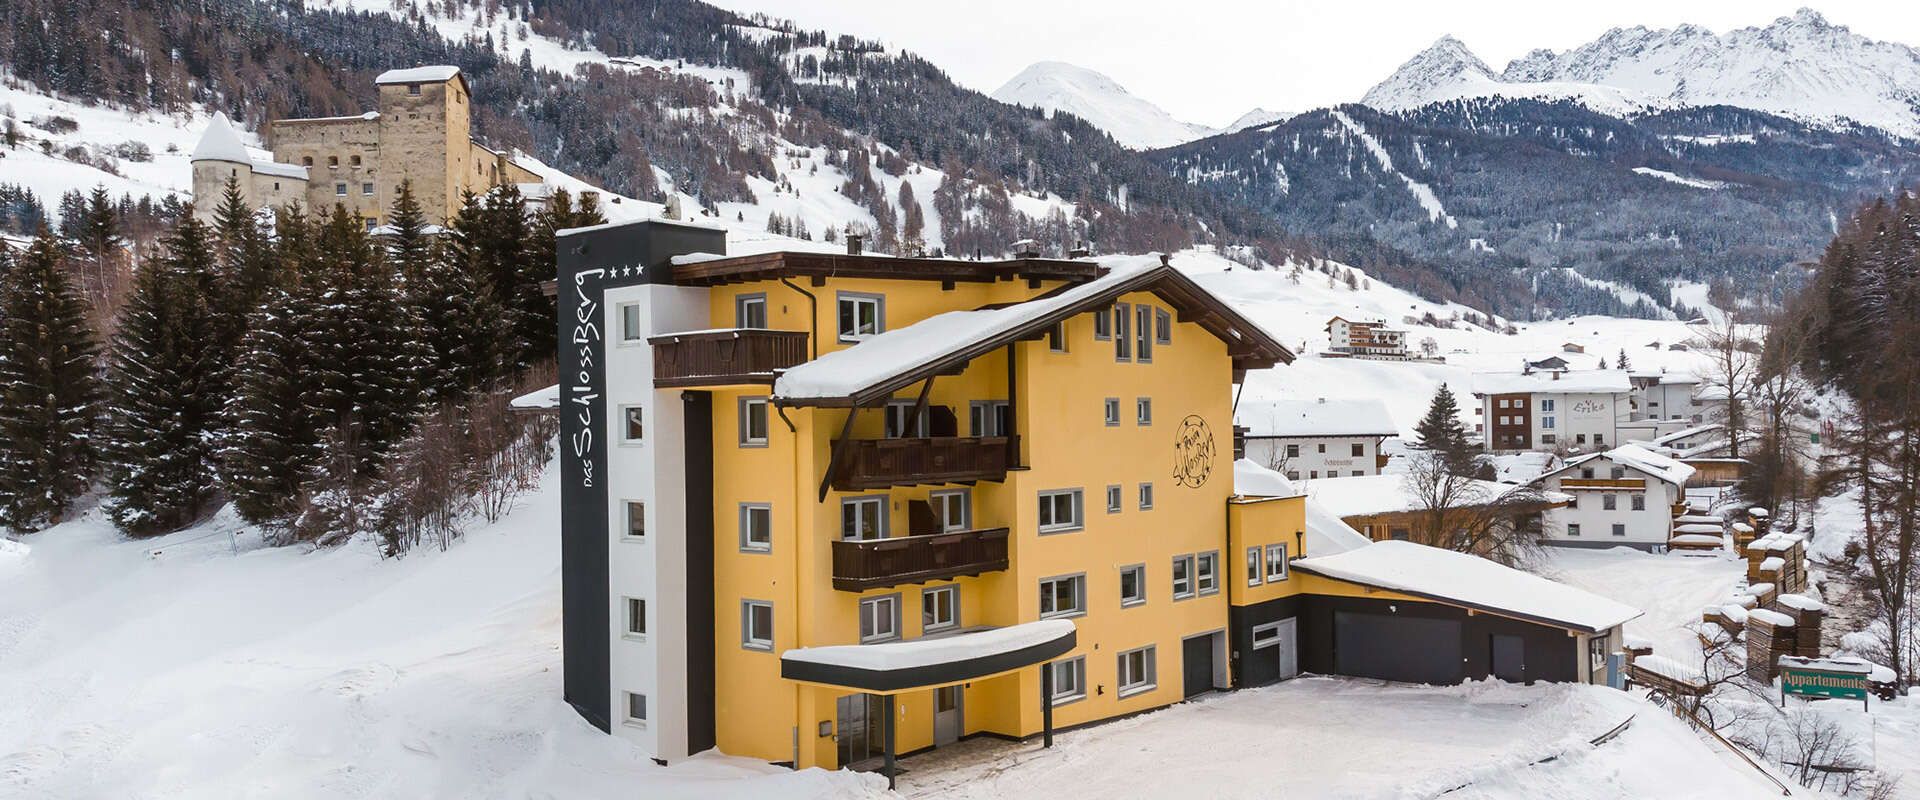 Hotel Das Schlossberg Nauders im Tiroler Oberland im Winter